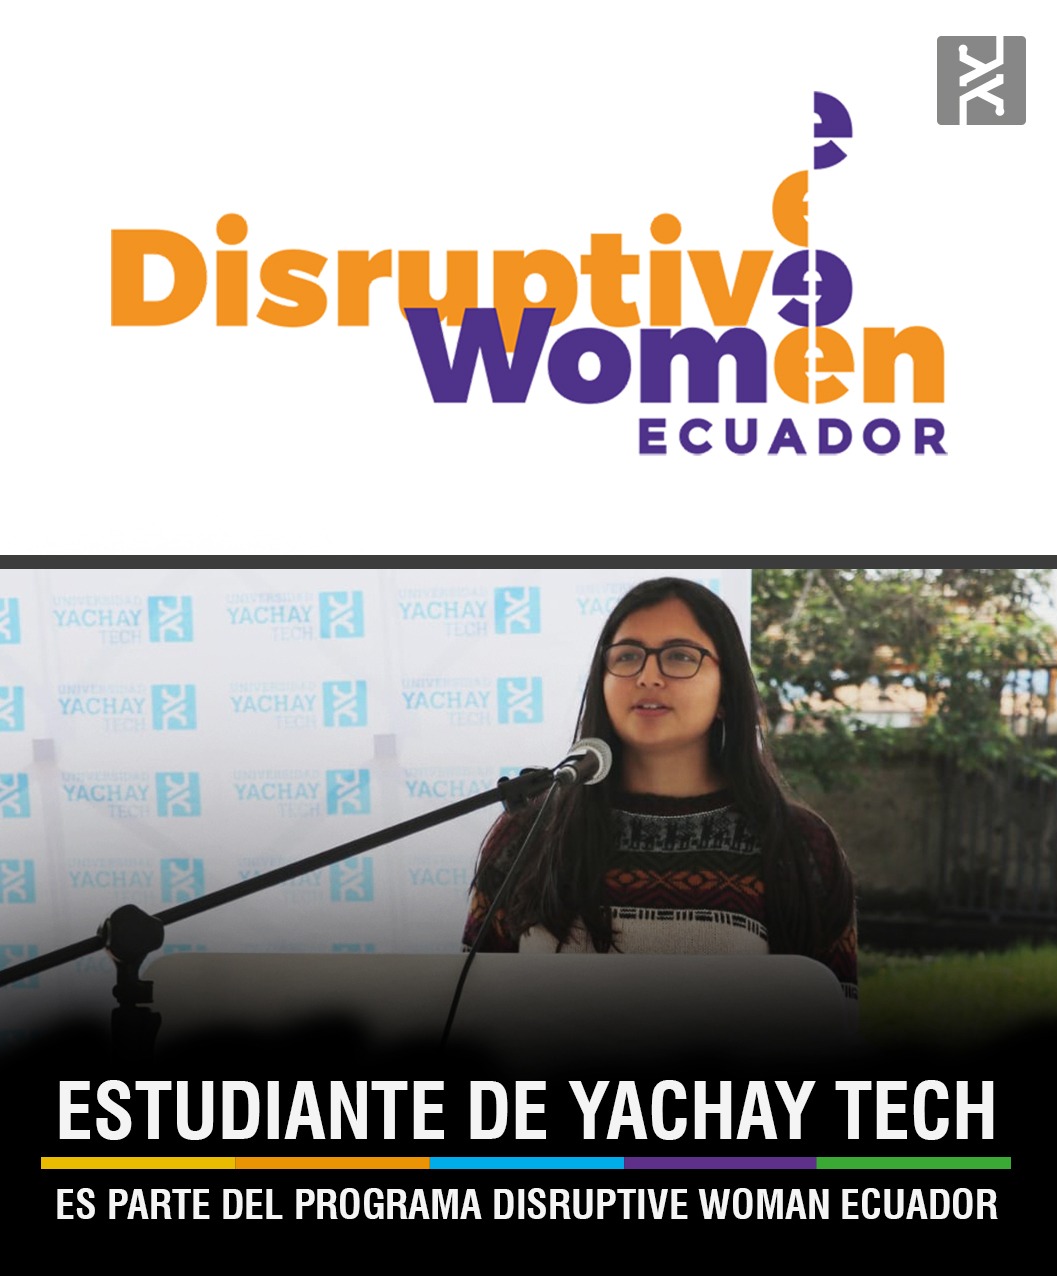 YACHAY TECH STUDENT IS PART OF THE “DISRUPTIVE WOMAN ECUADOR” PROGRAM